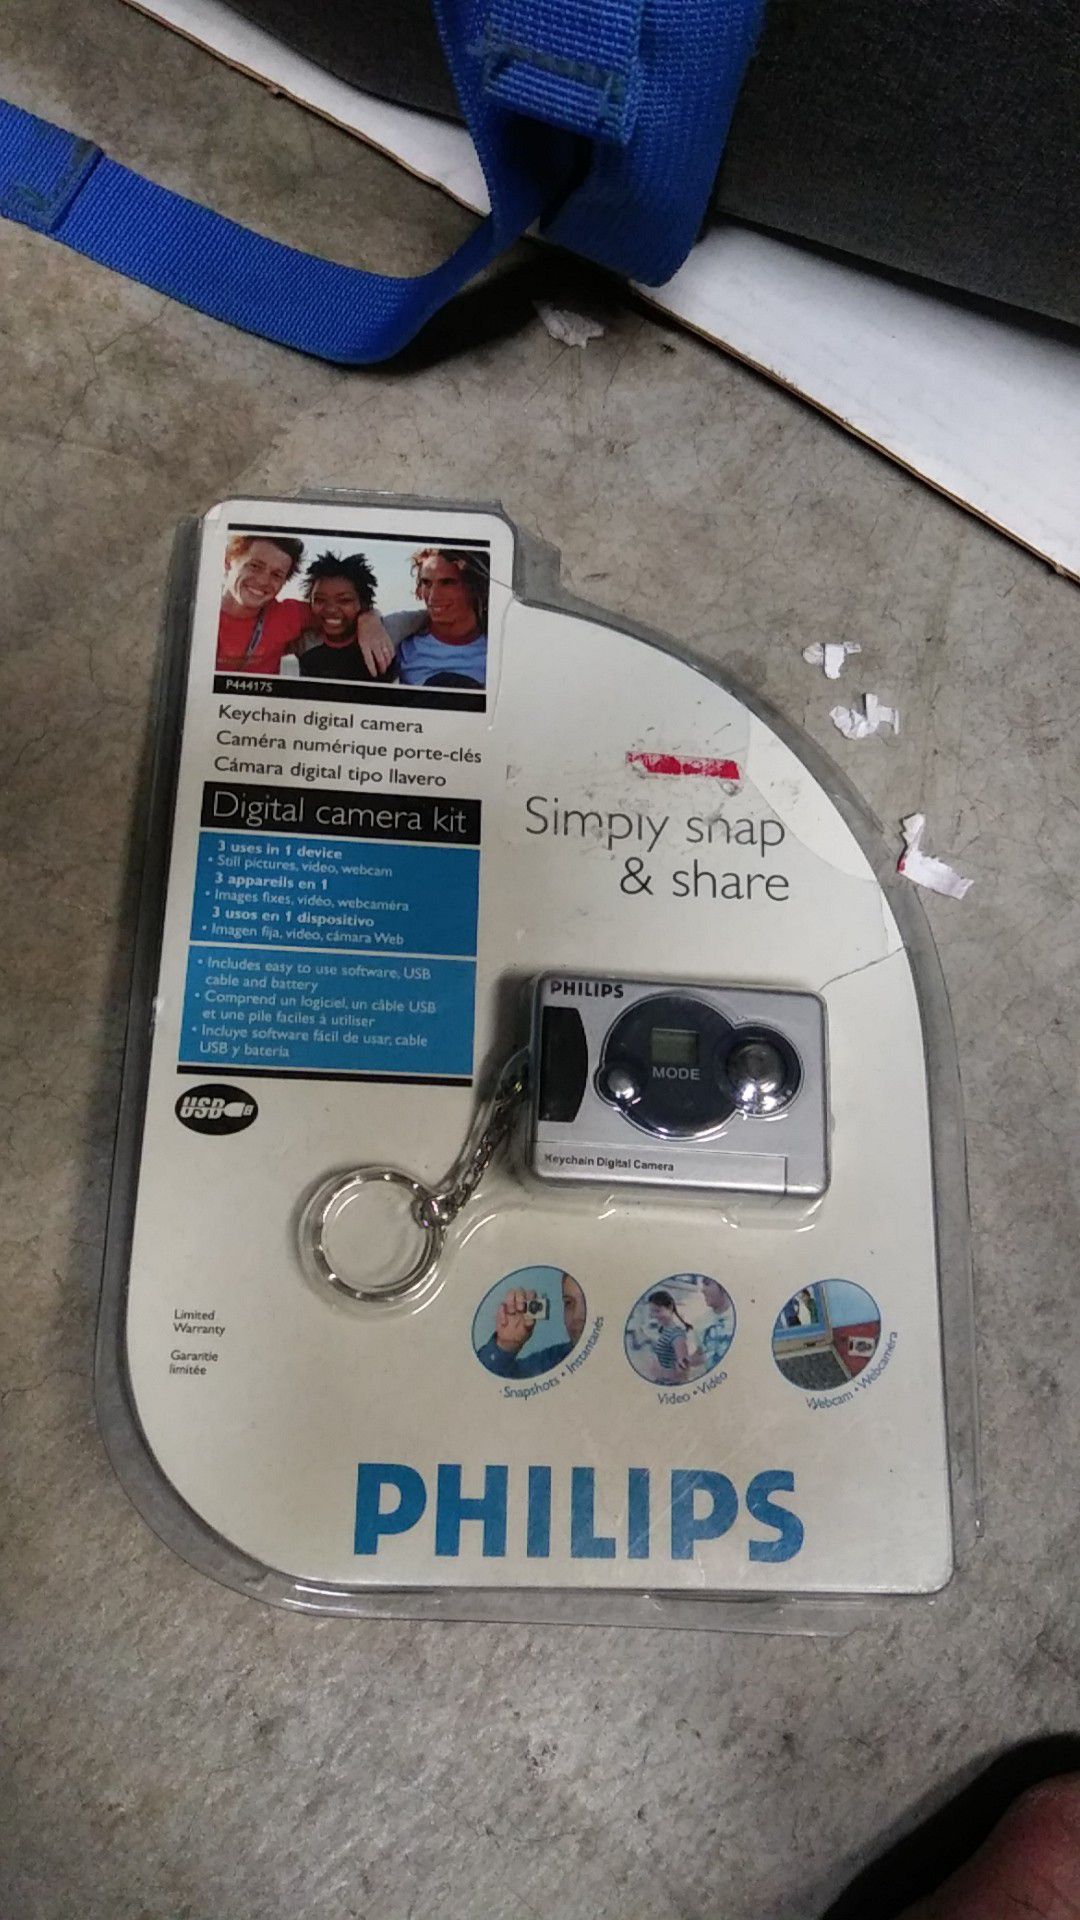 Phillips keychain digital camera